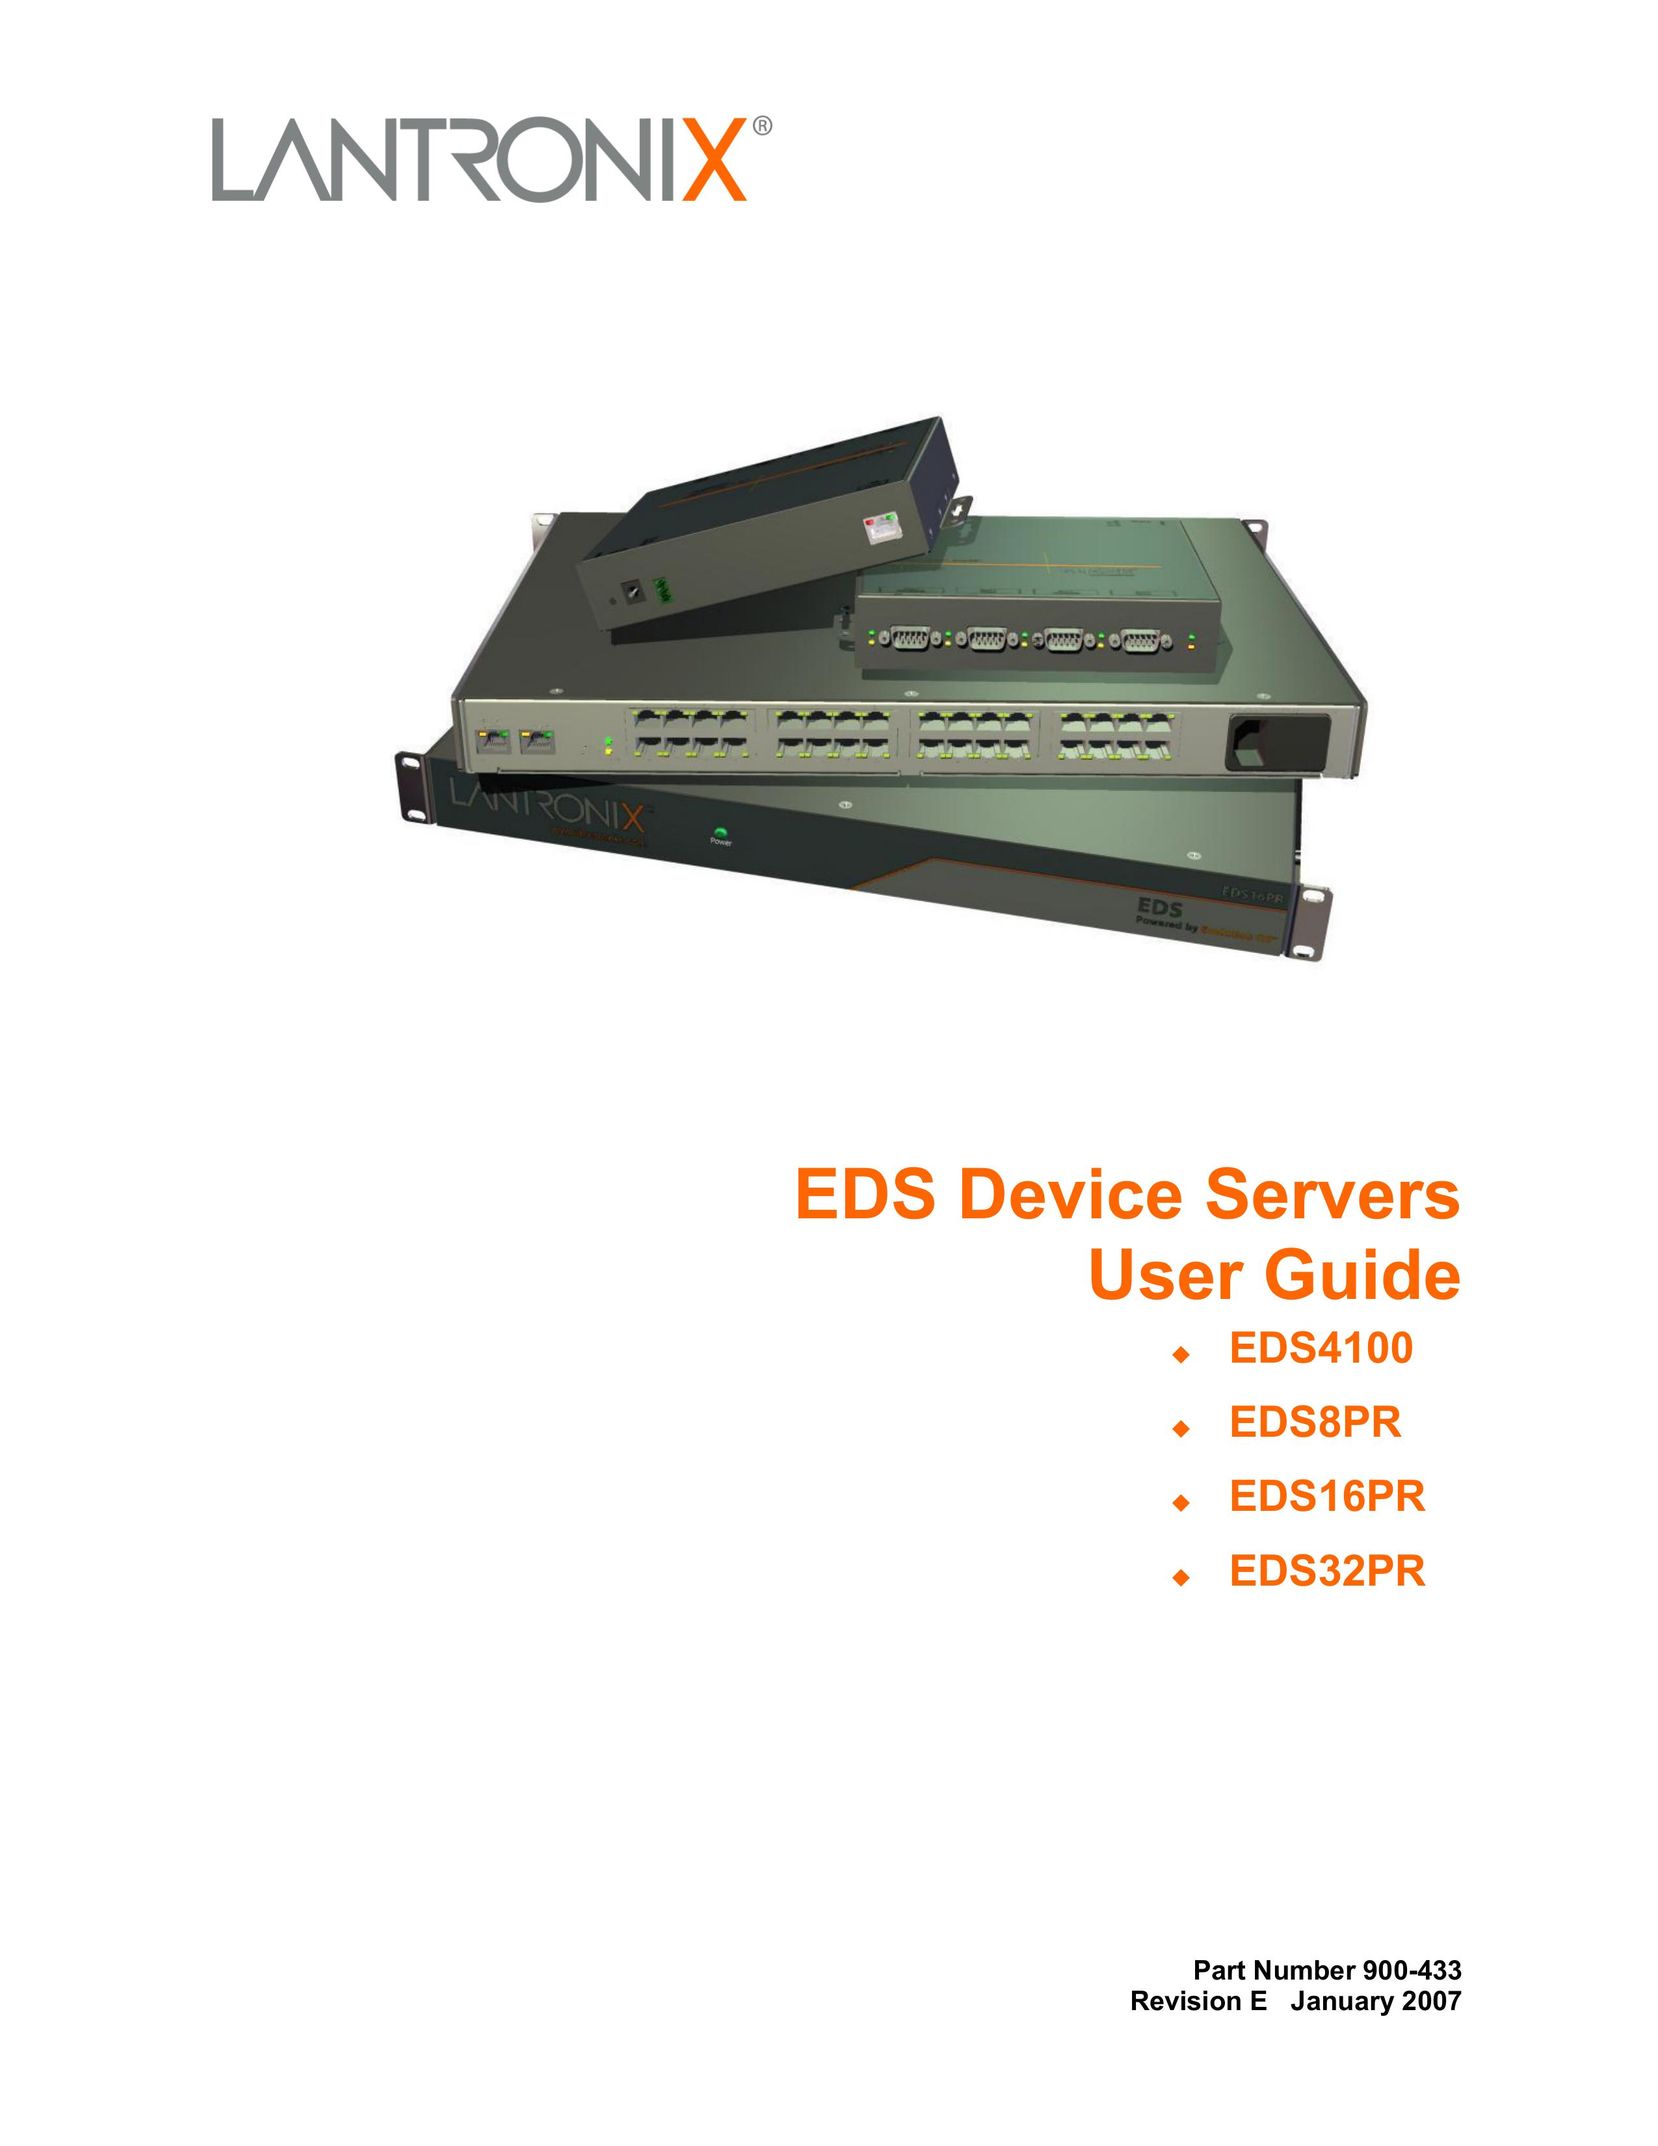 Lantronix EDS4100 Network Card User Manual